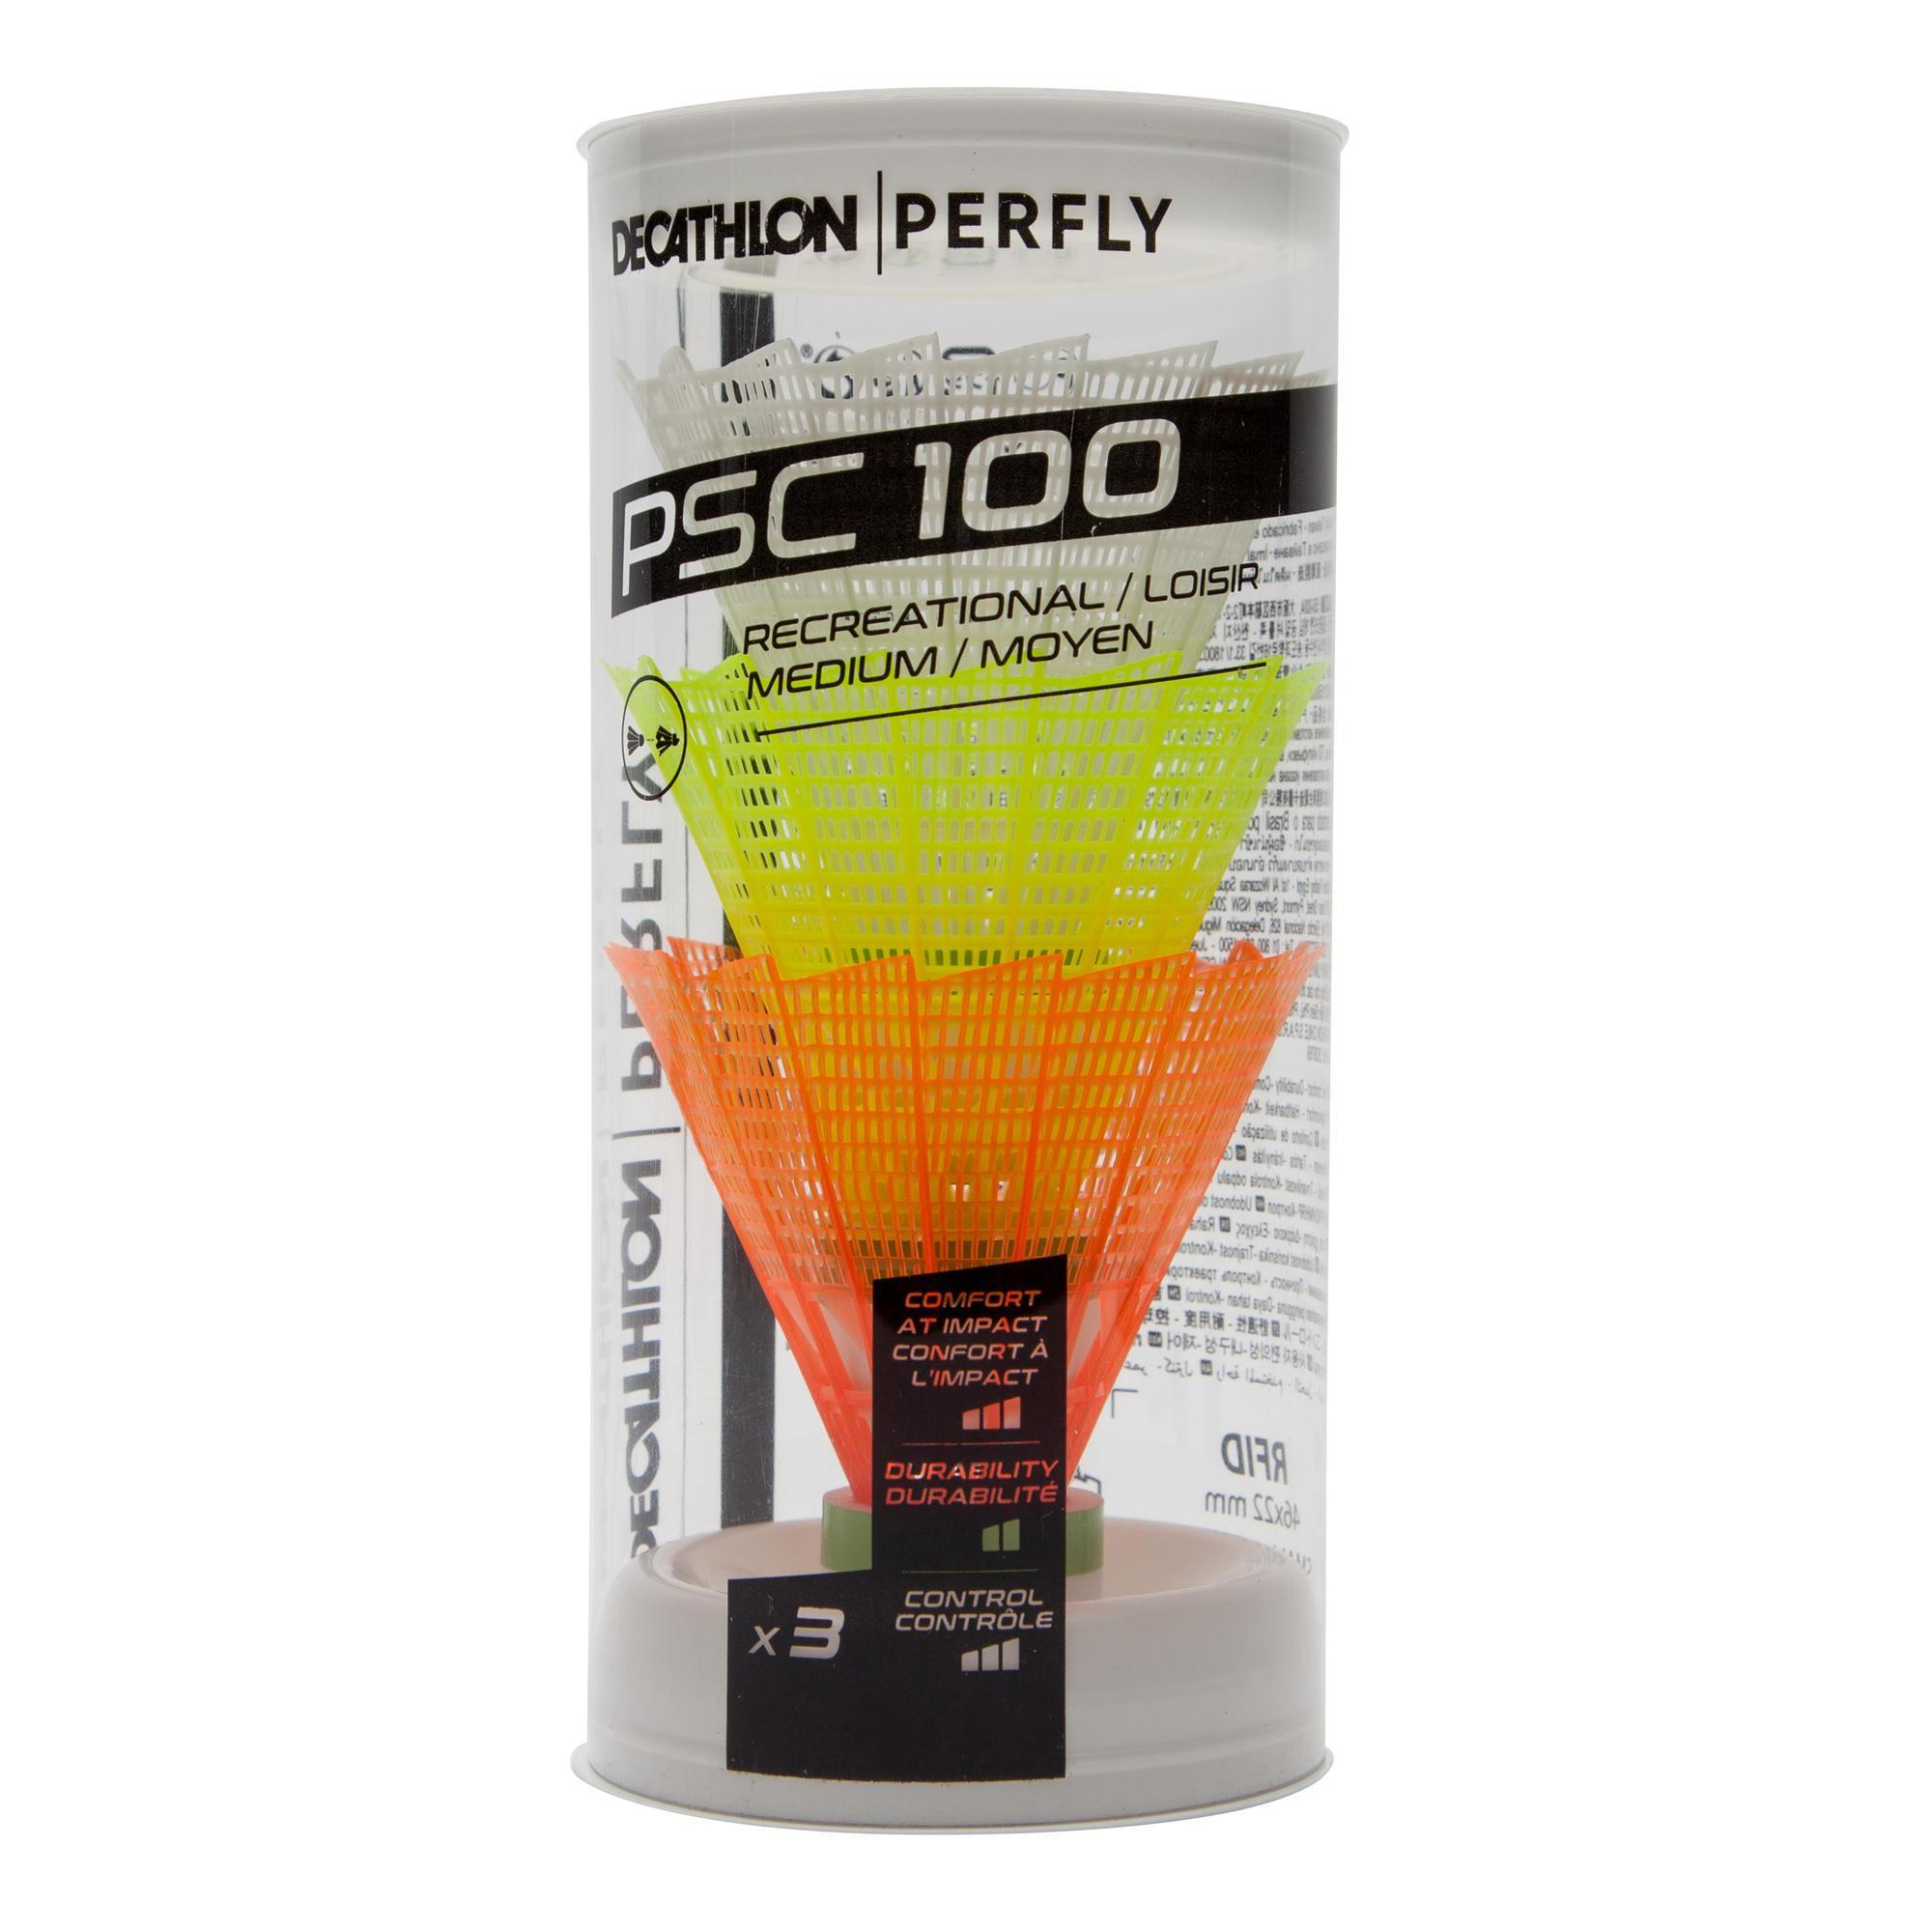 Decathlon | Volani badminton PSC 100 medium bianco-grigio-arancione x3 |  Perfly